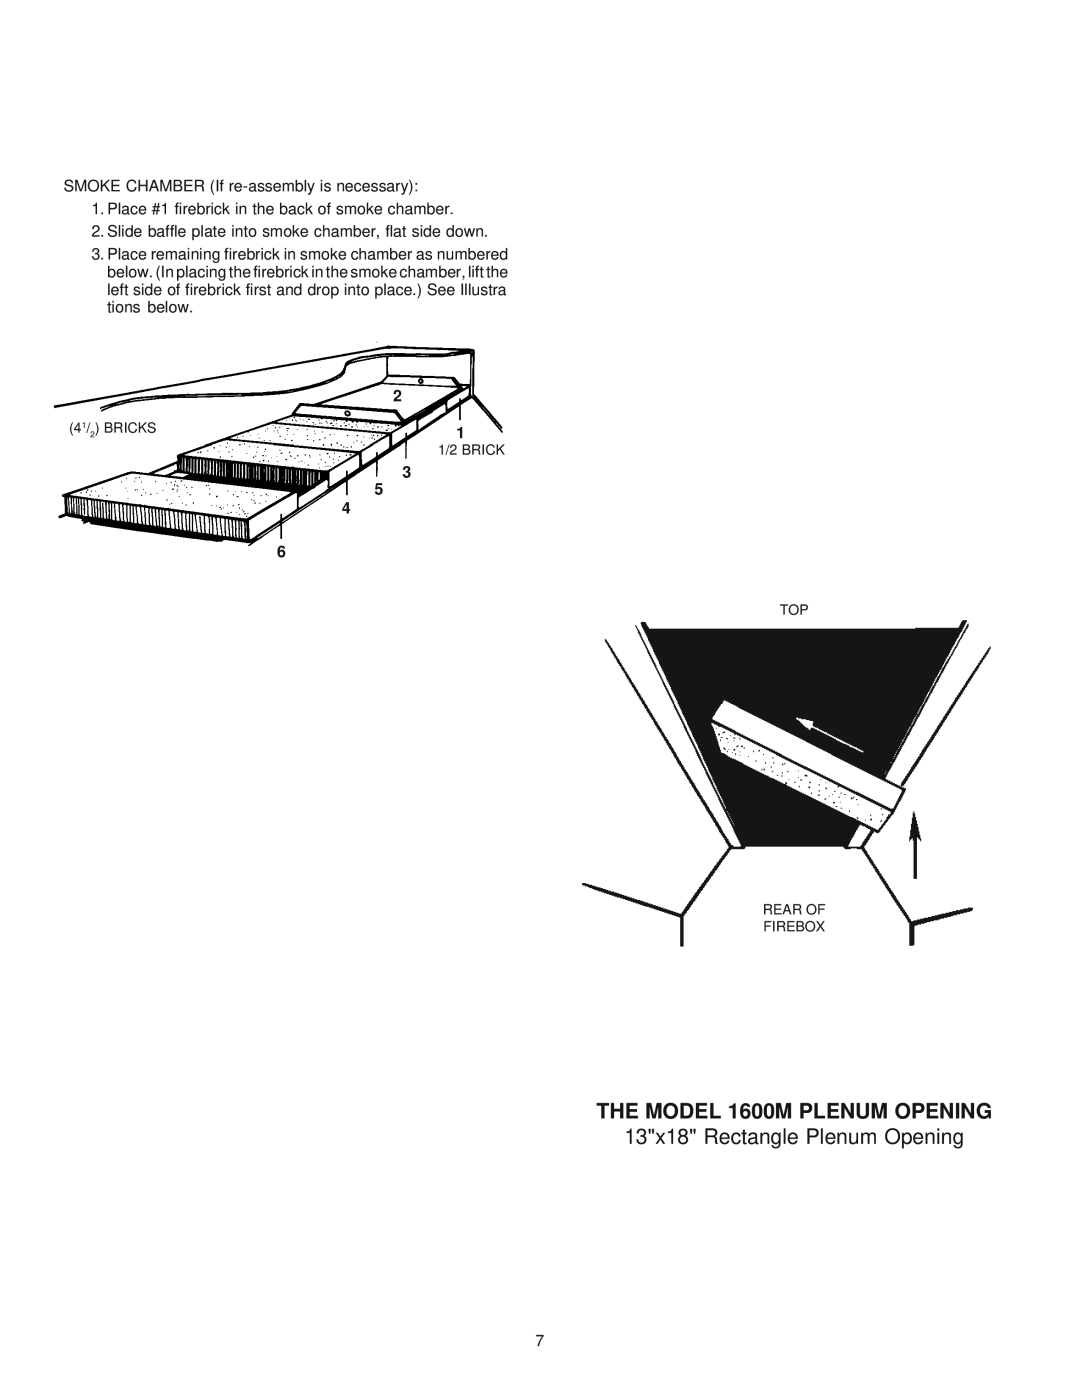 United States Stove manual THE MODEL 1600M PLENUM OPENING, 13x18 Rectangle Plenum Opening 